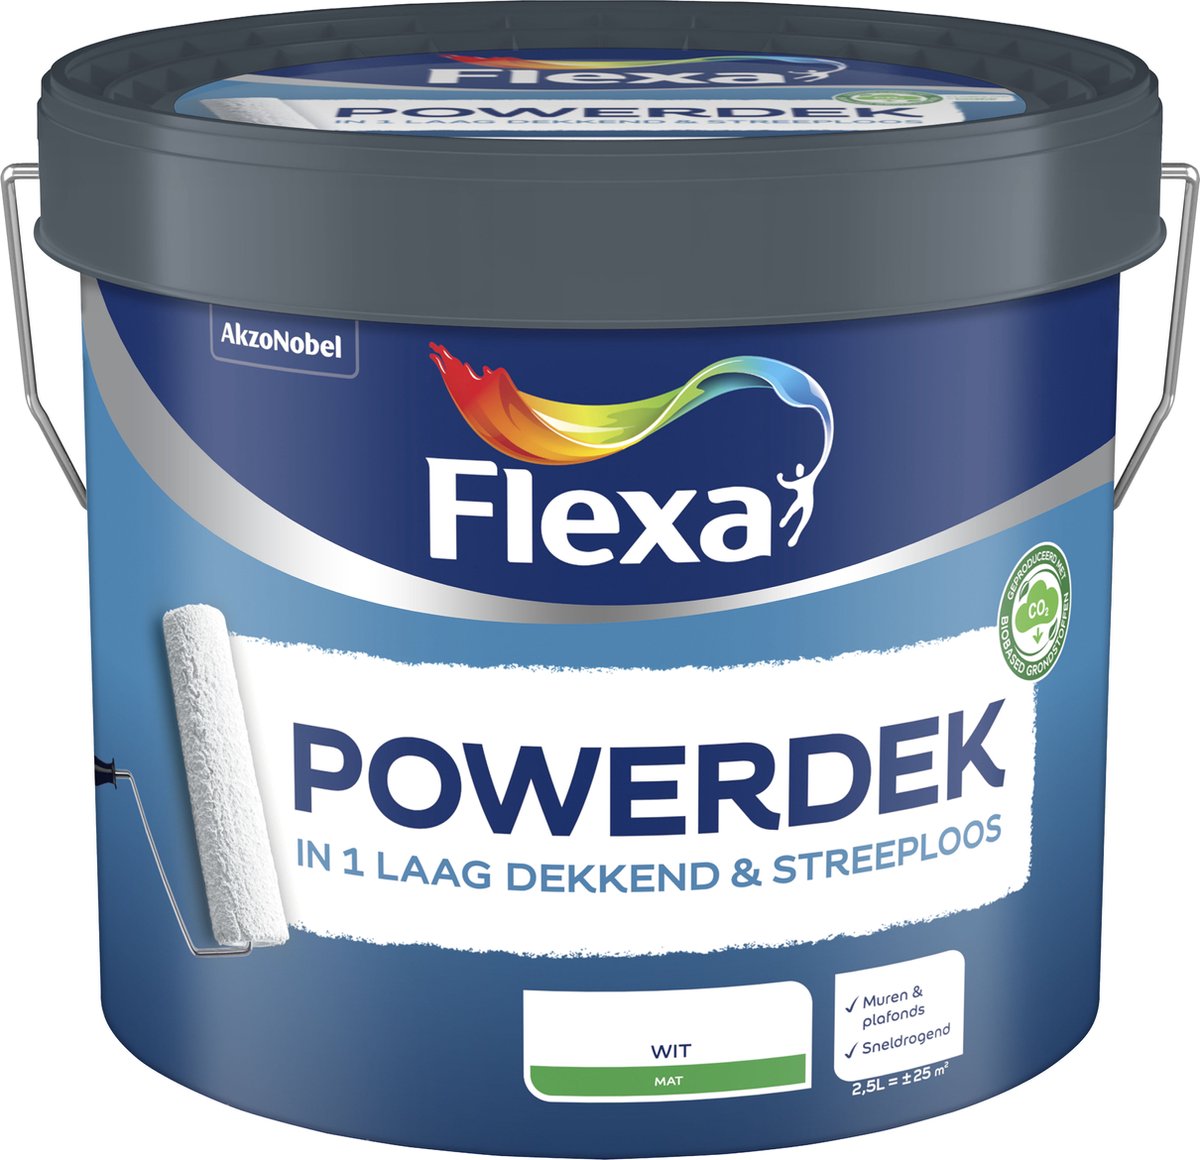 Flexa Powerdek Muurverf - Muren & Plafonds - Binnen - Wit - 5 liter - Flexa